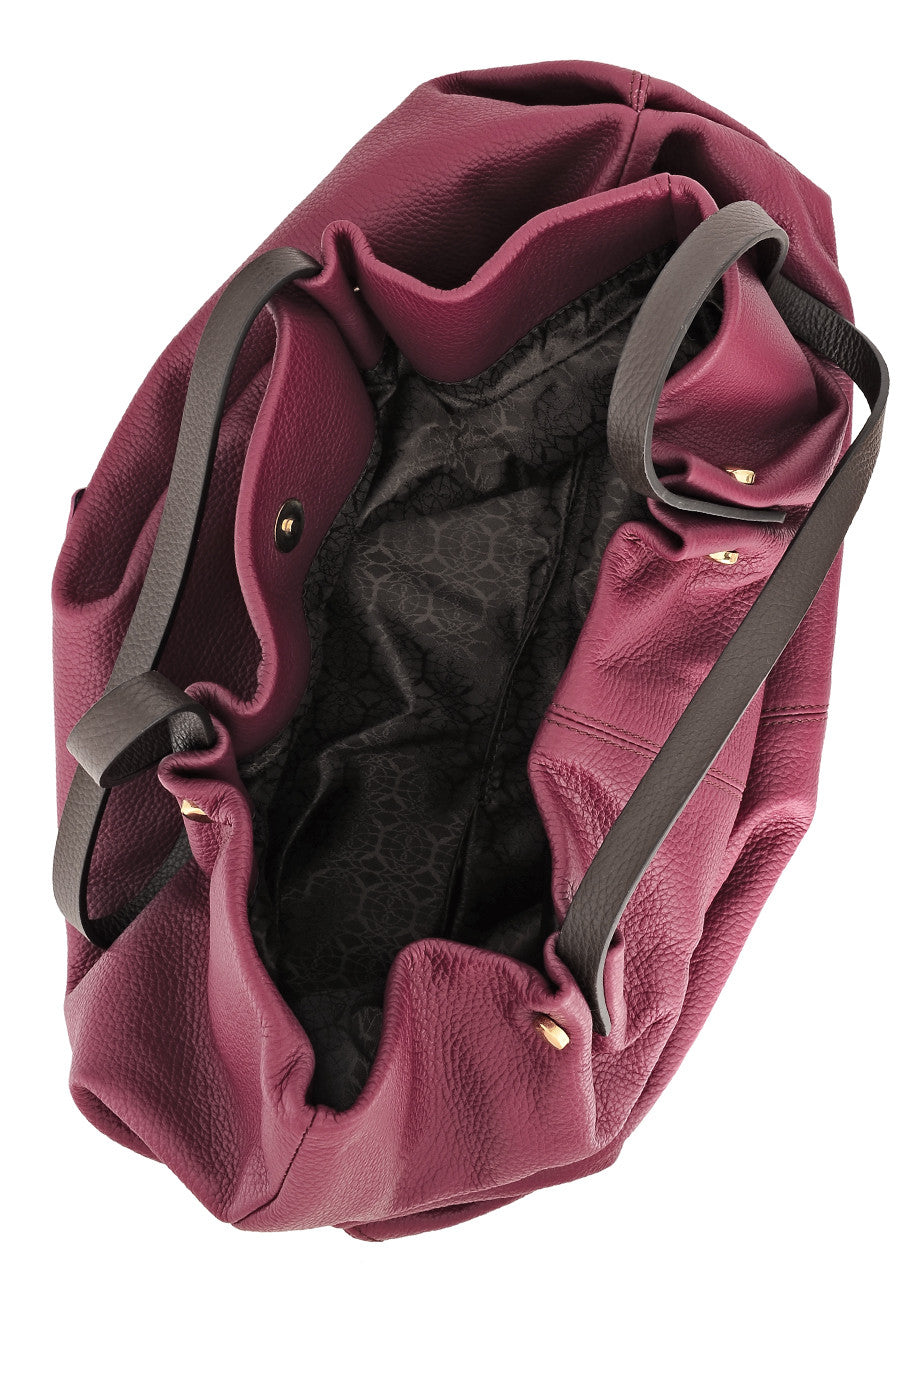 ADRIA Purple Leather Shoulder Bag